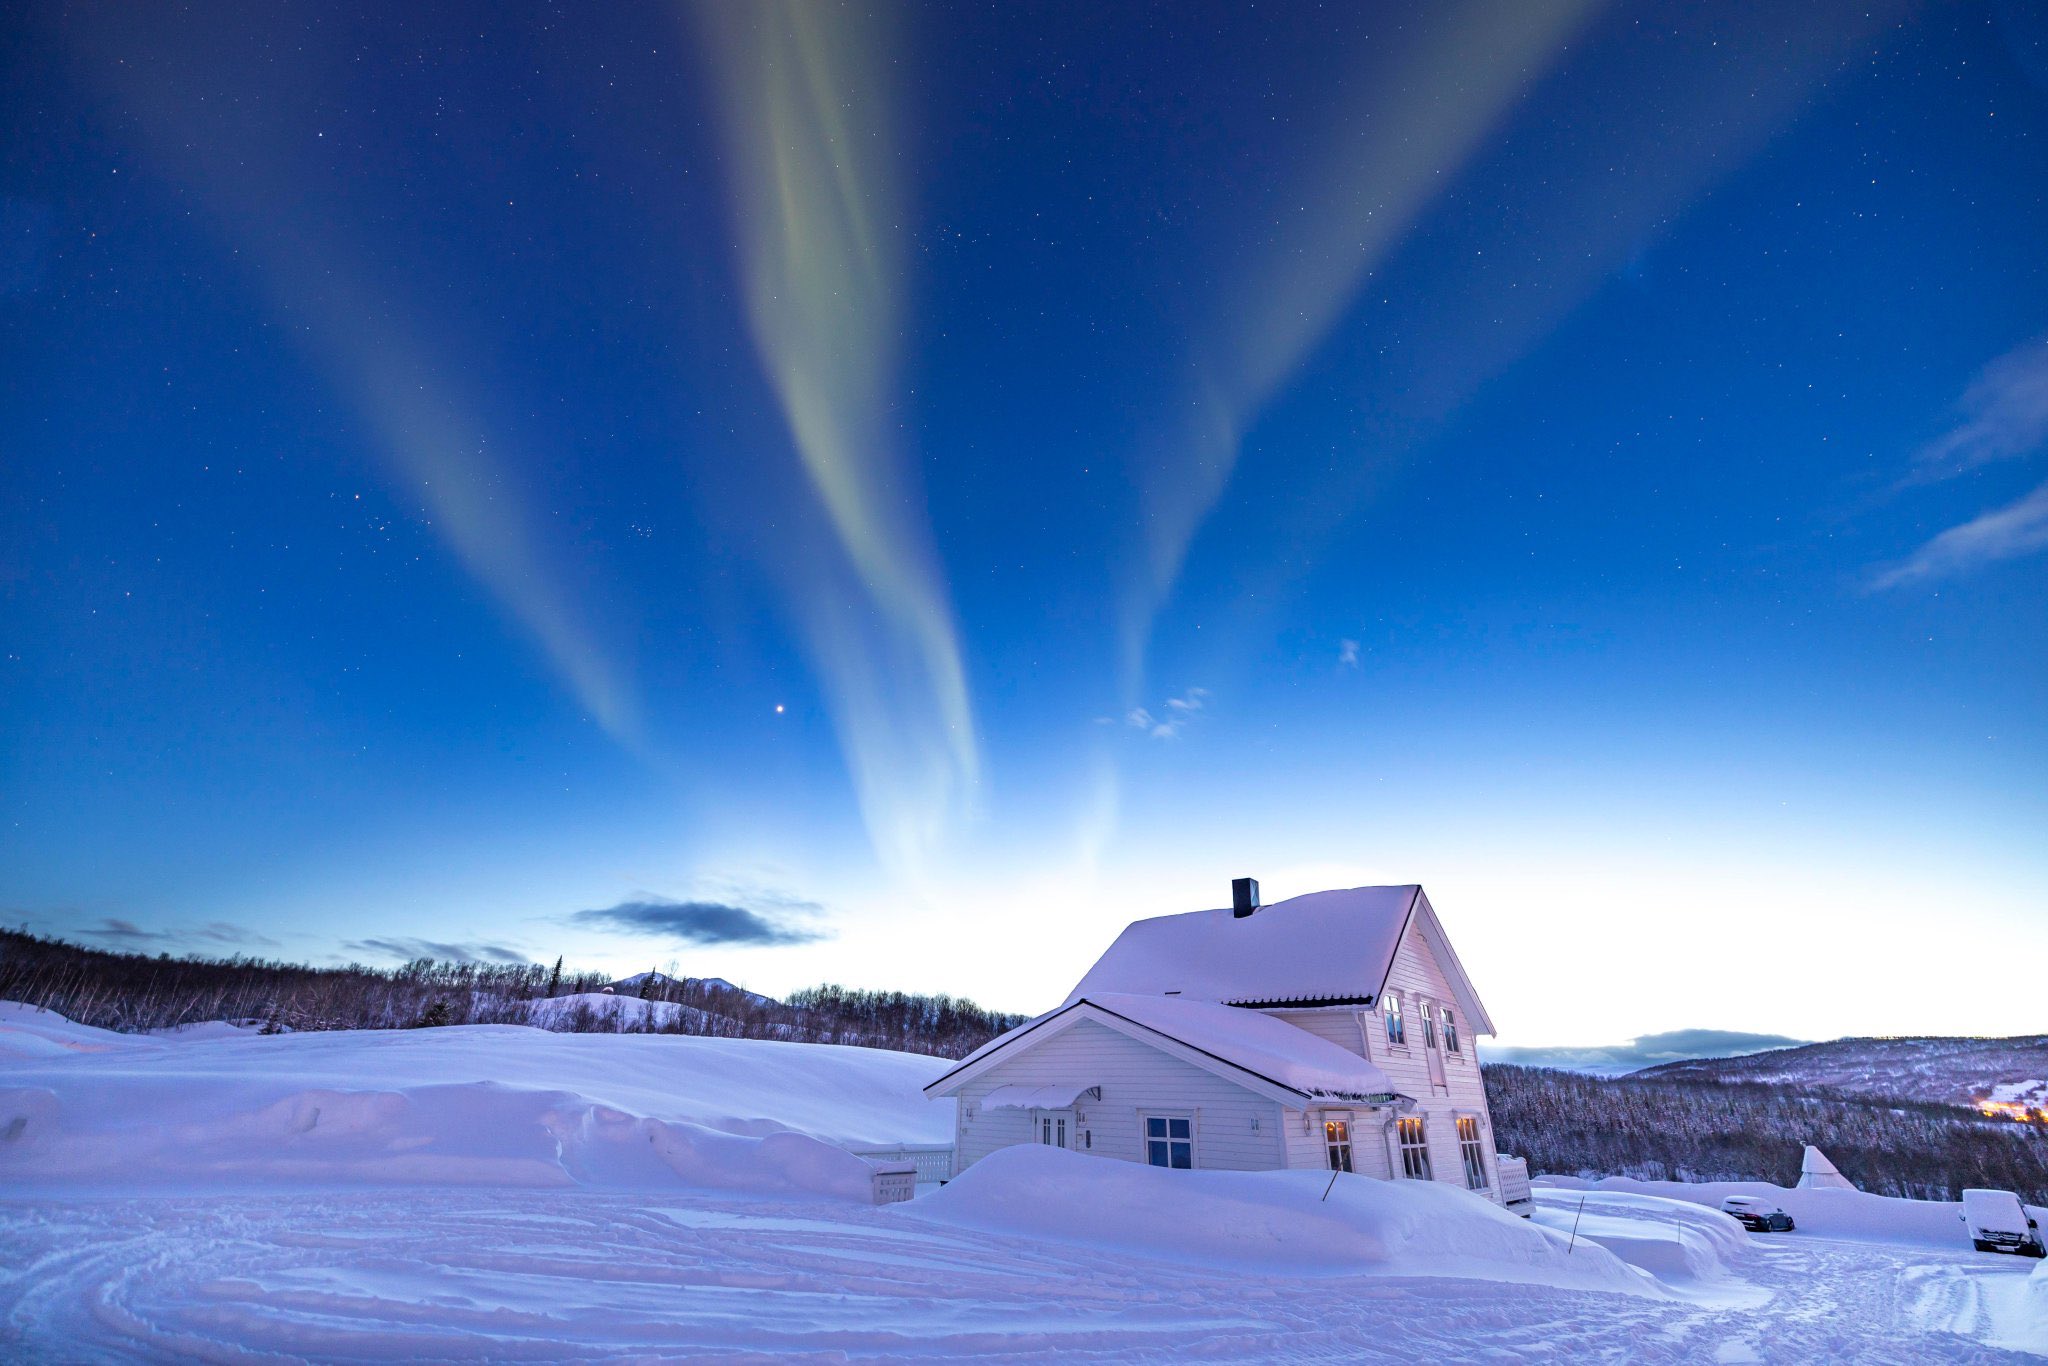 Snow and aurora in Senja, Norway by Matt Robinson @Astro_Matt27